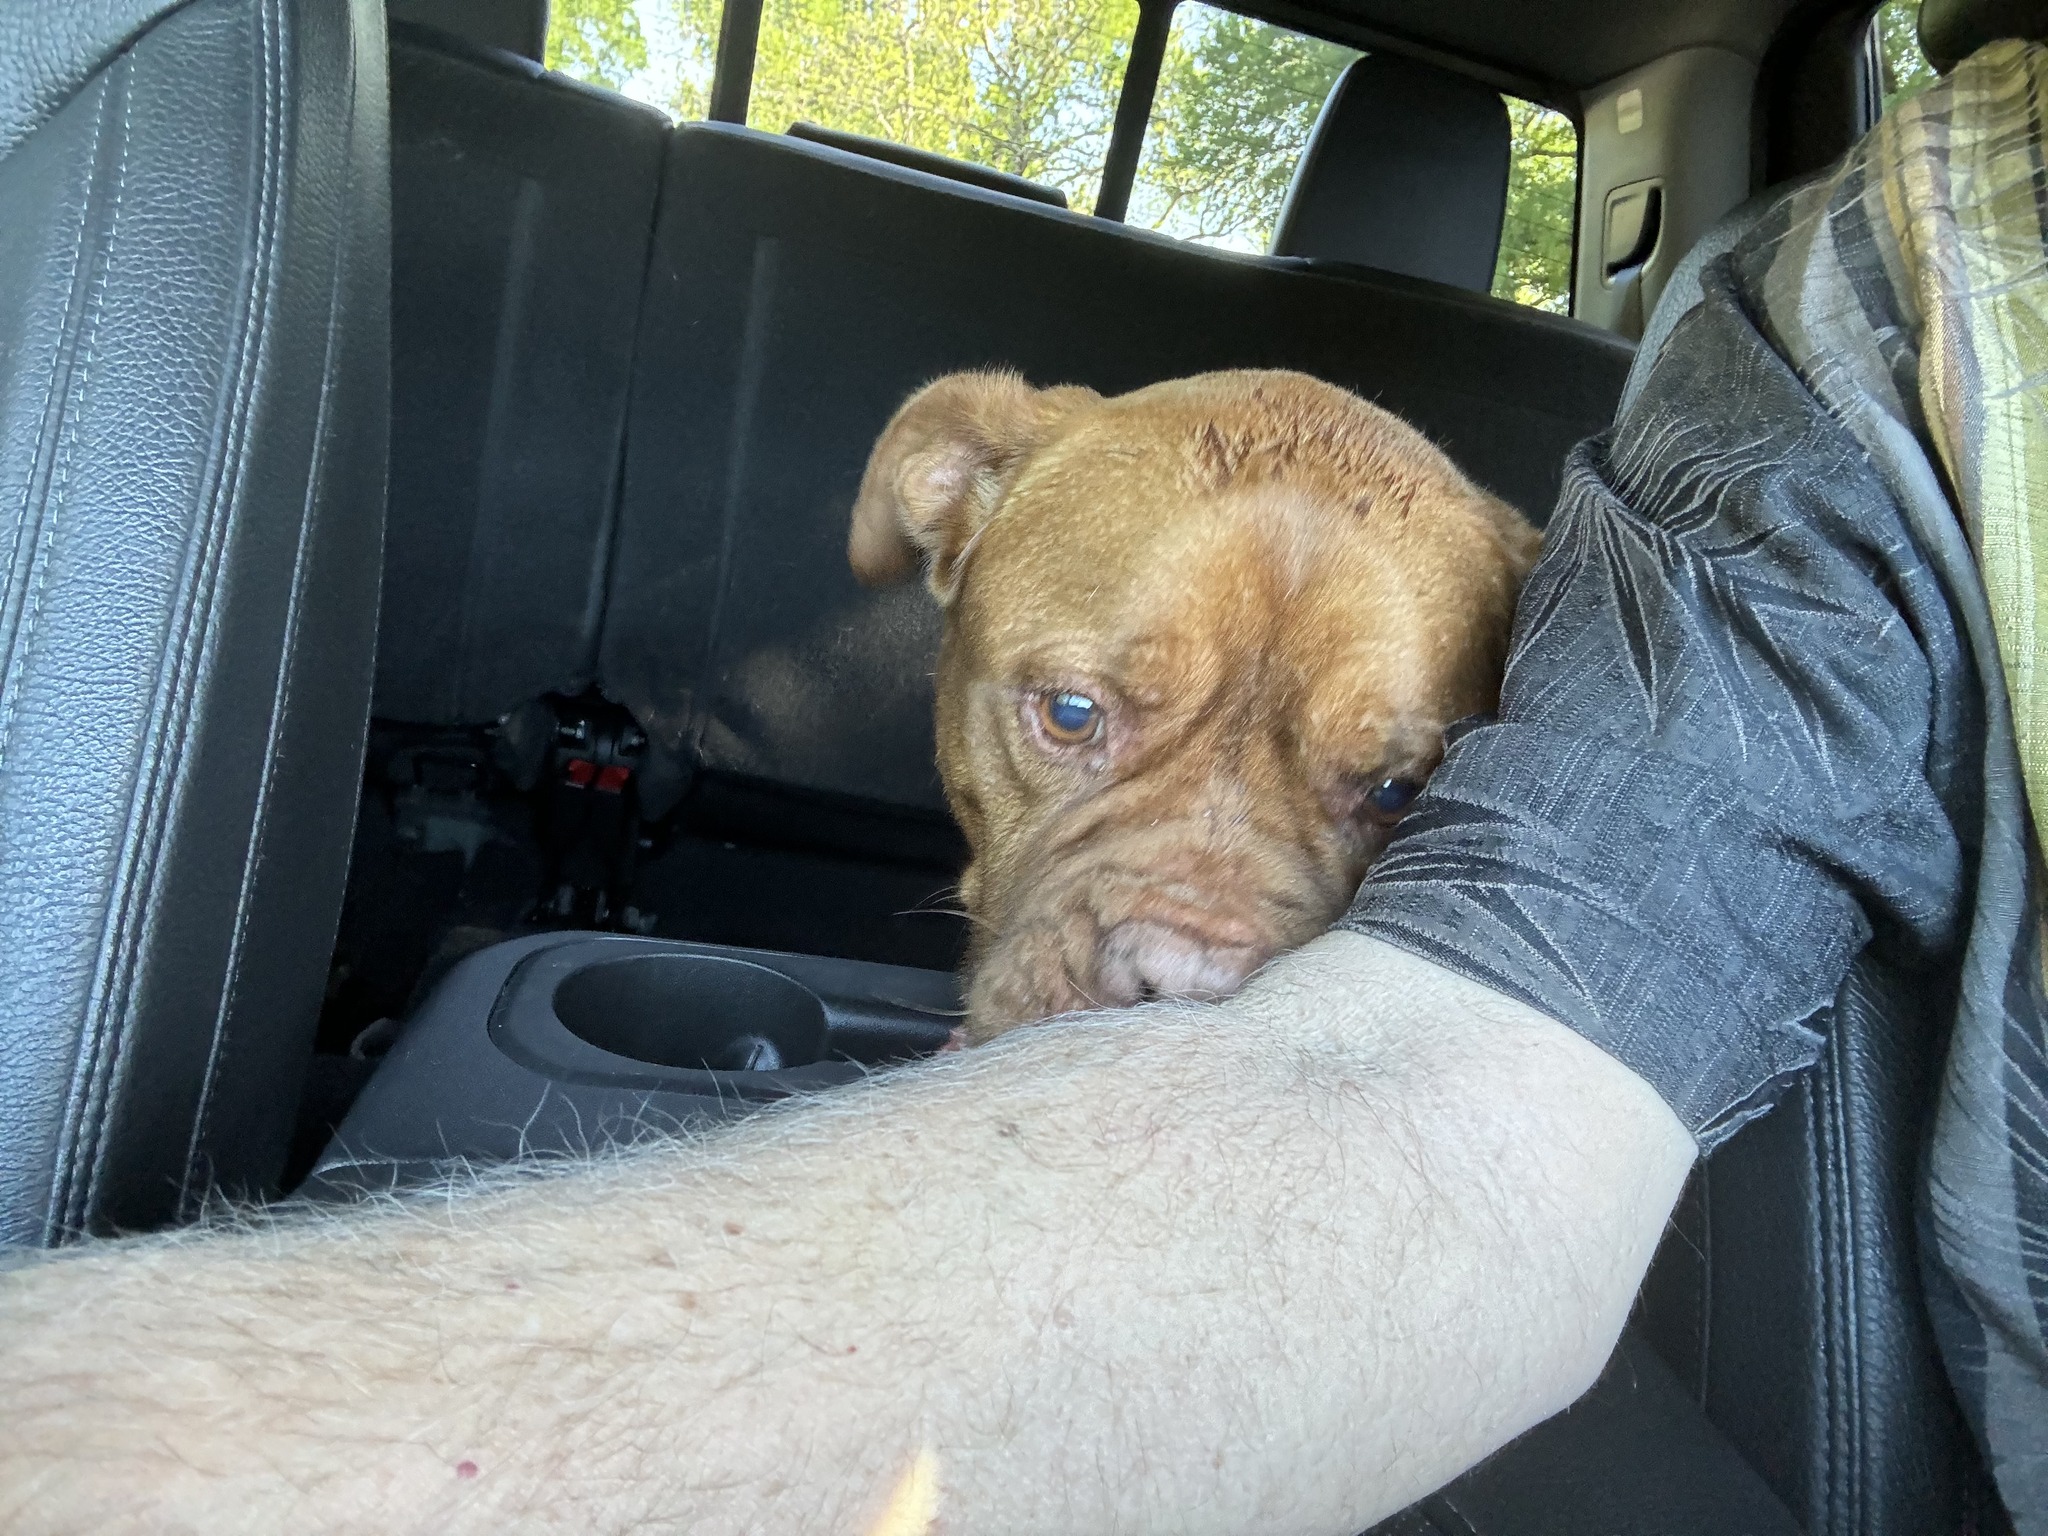 sad dog in a car with a man